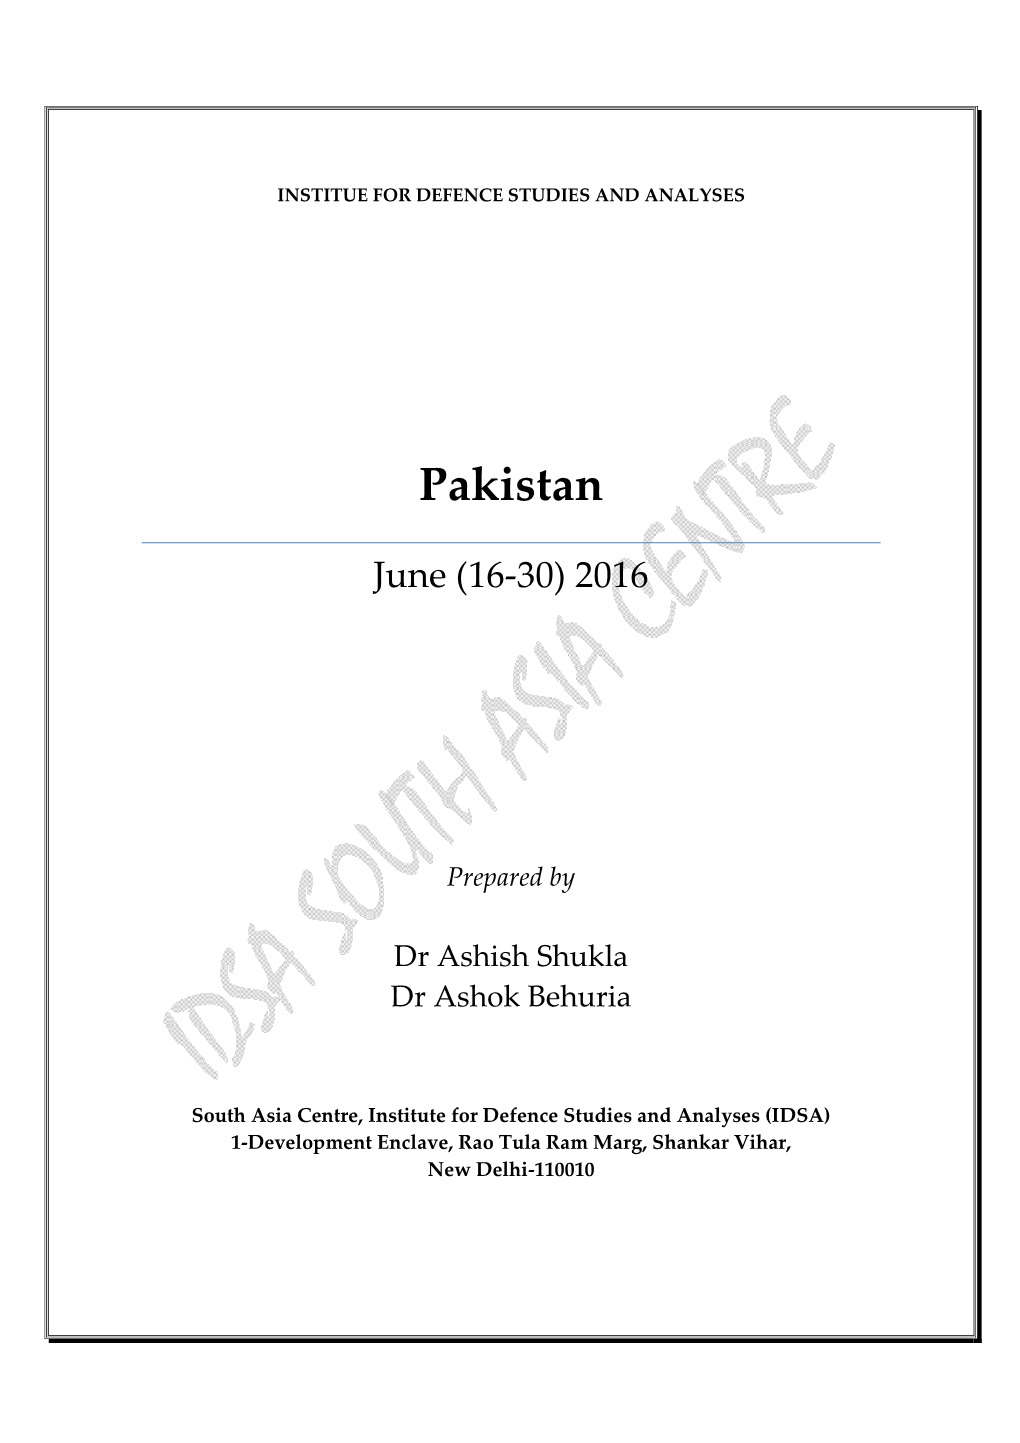 Pakistan Fortnightly Report